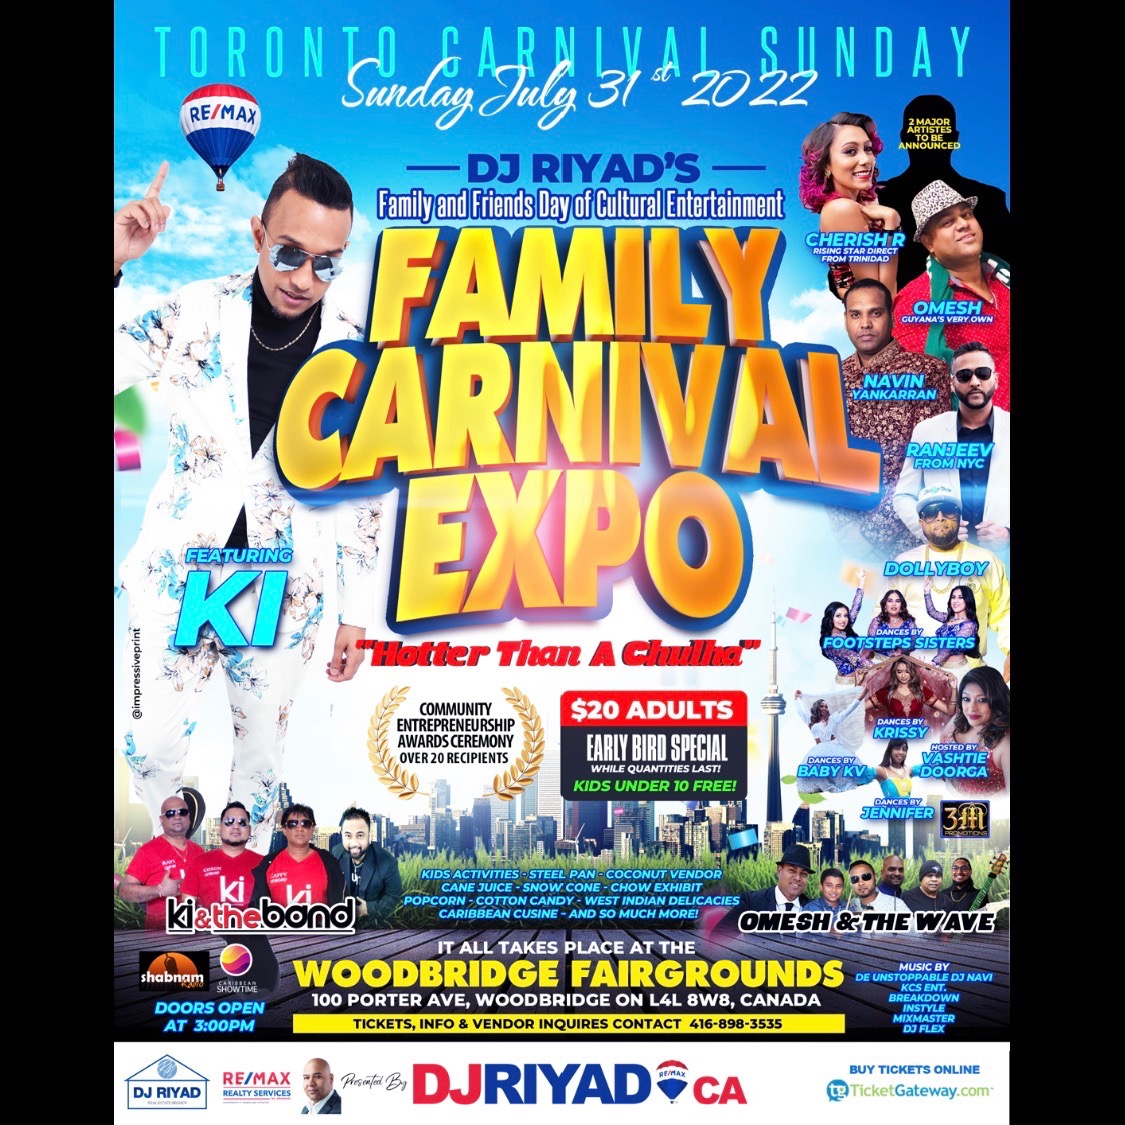 Family Carnival Expo